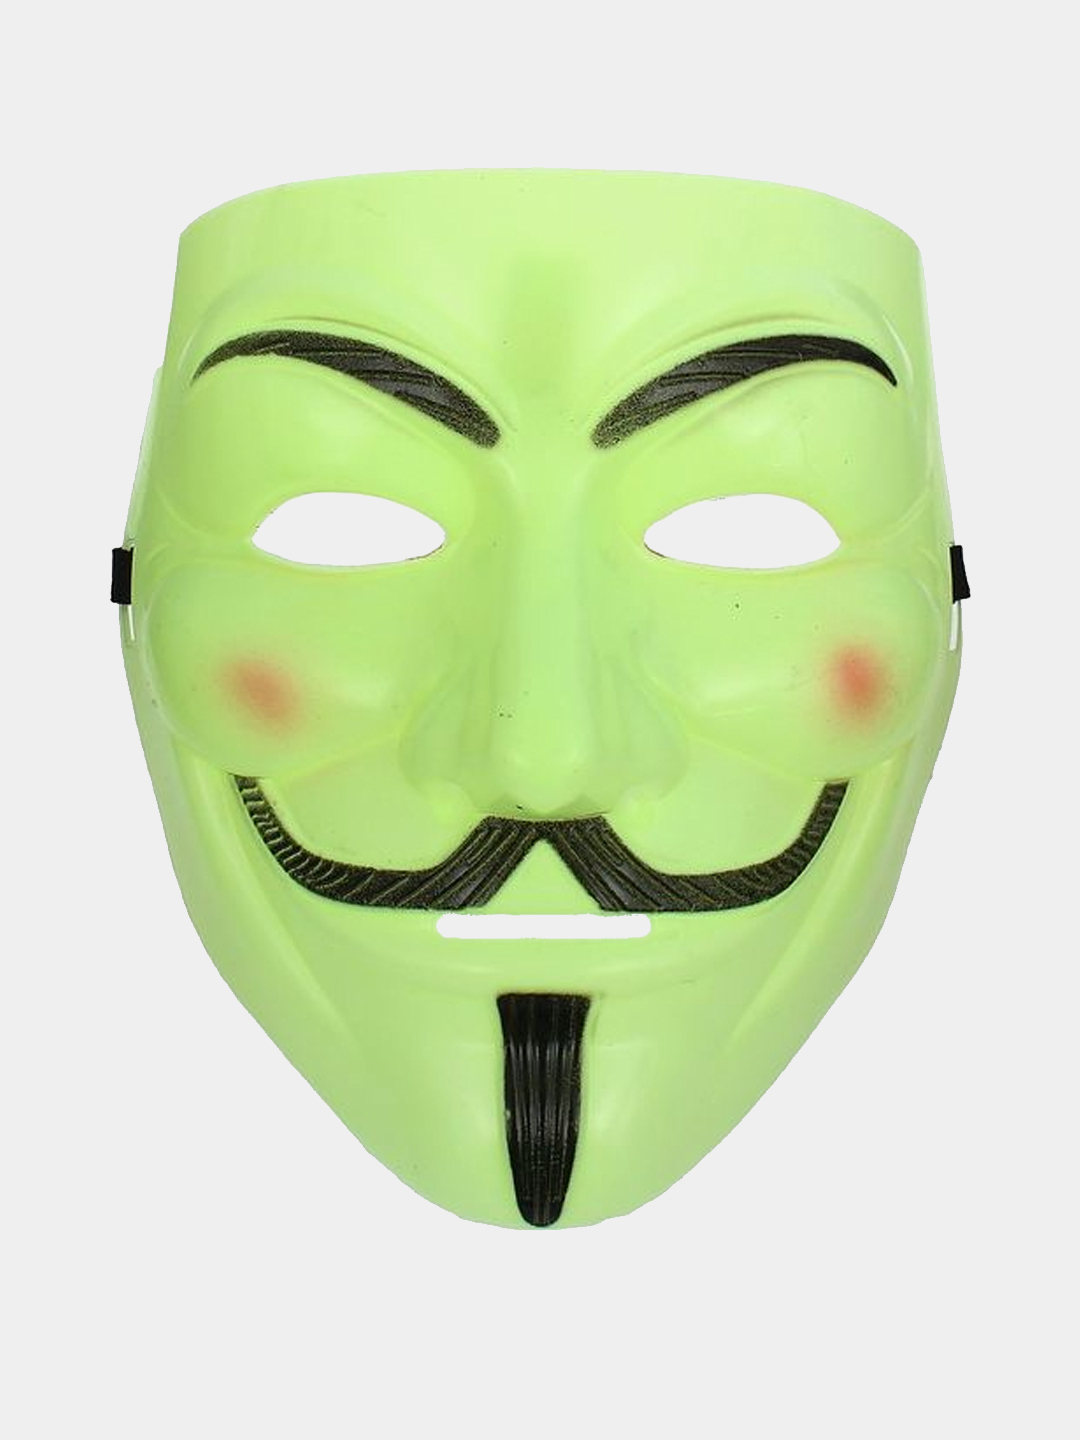 Маска 5 обсуждения. Маска Анонимуса маска Гая Фокса. Вендетта маска Гая Фокса.